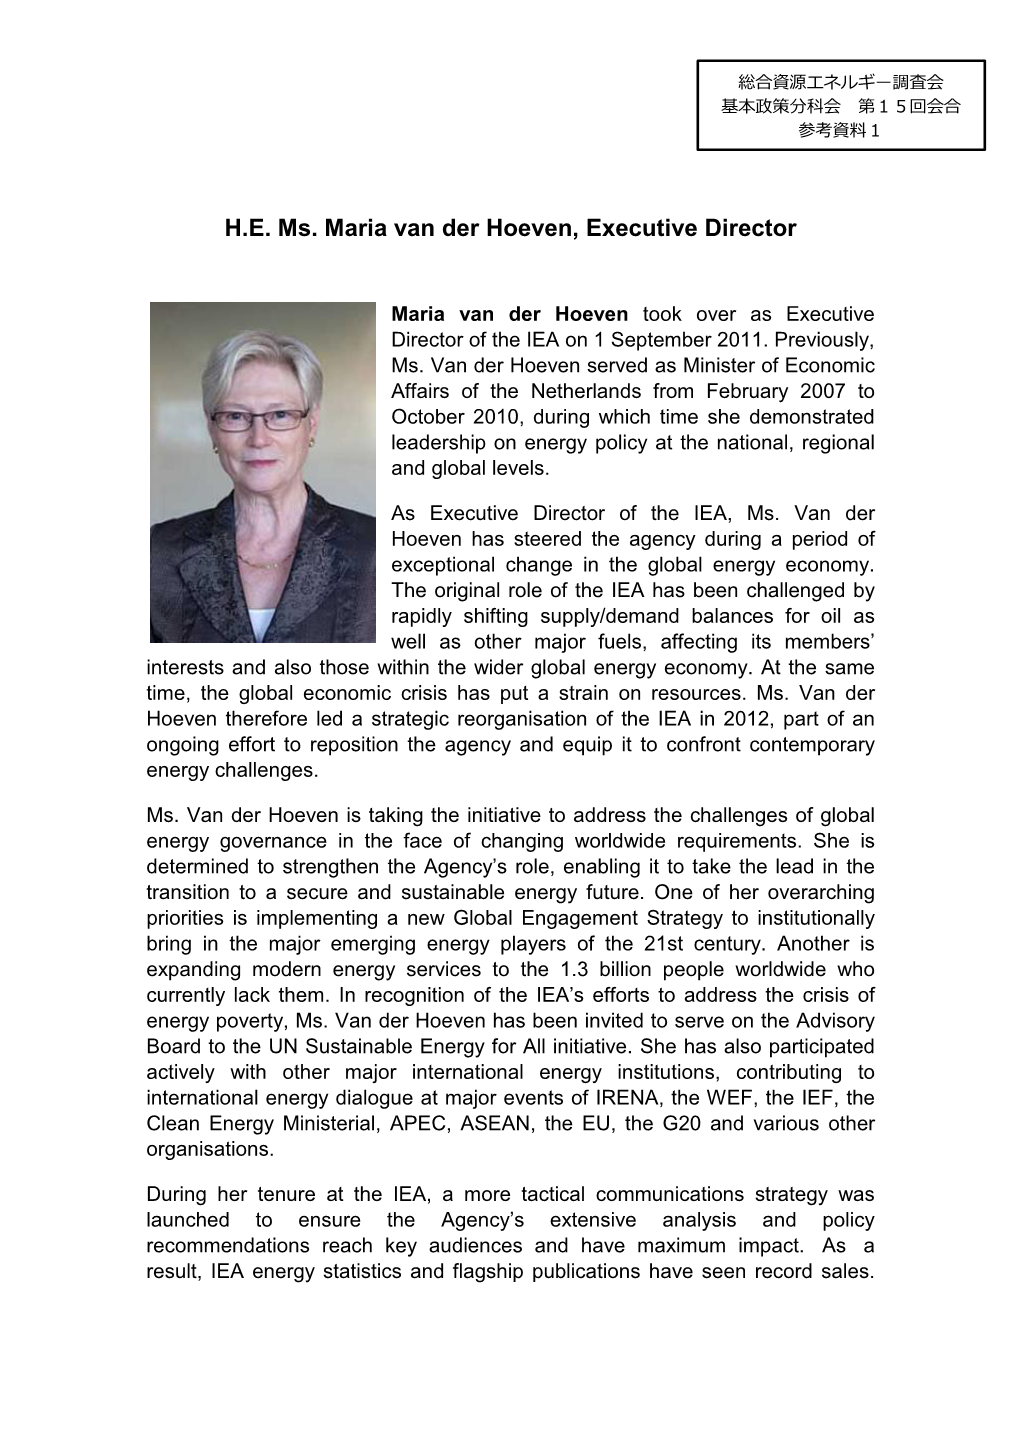 H.E. Ms. Maria Van Der Hoeven, Executive Director